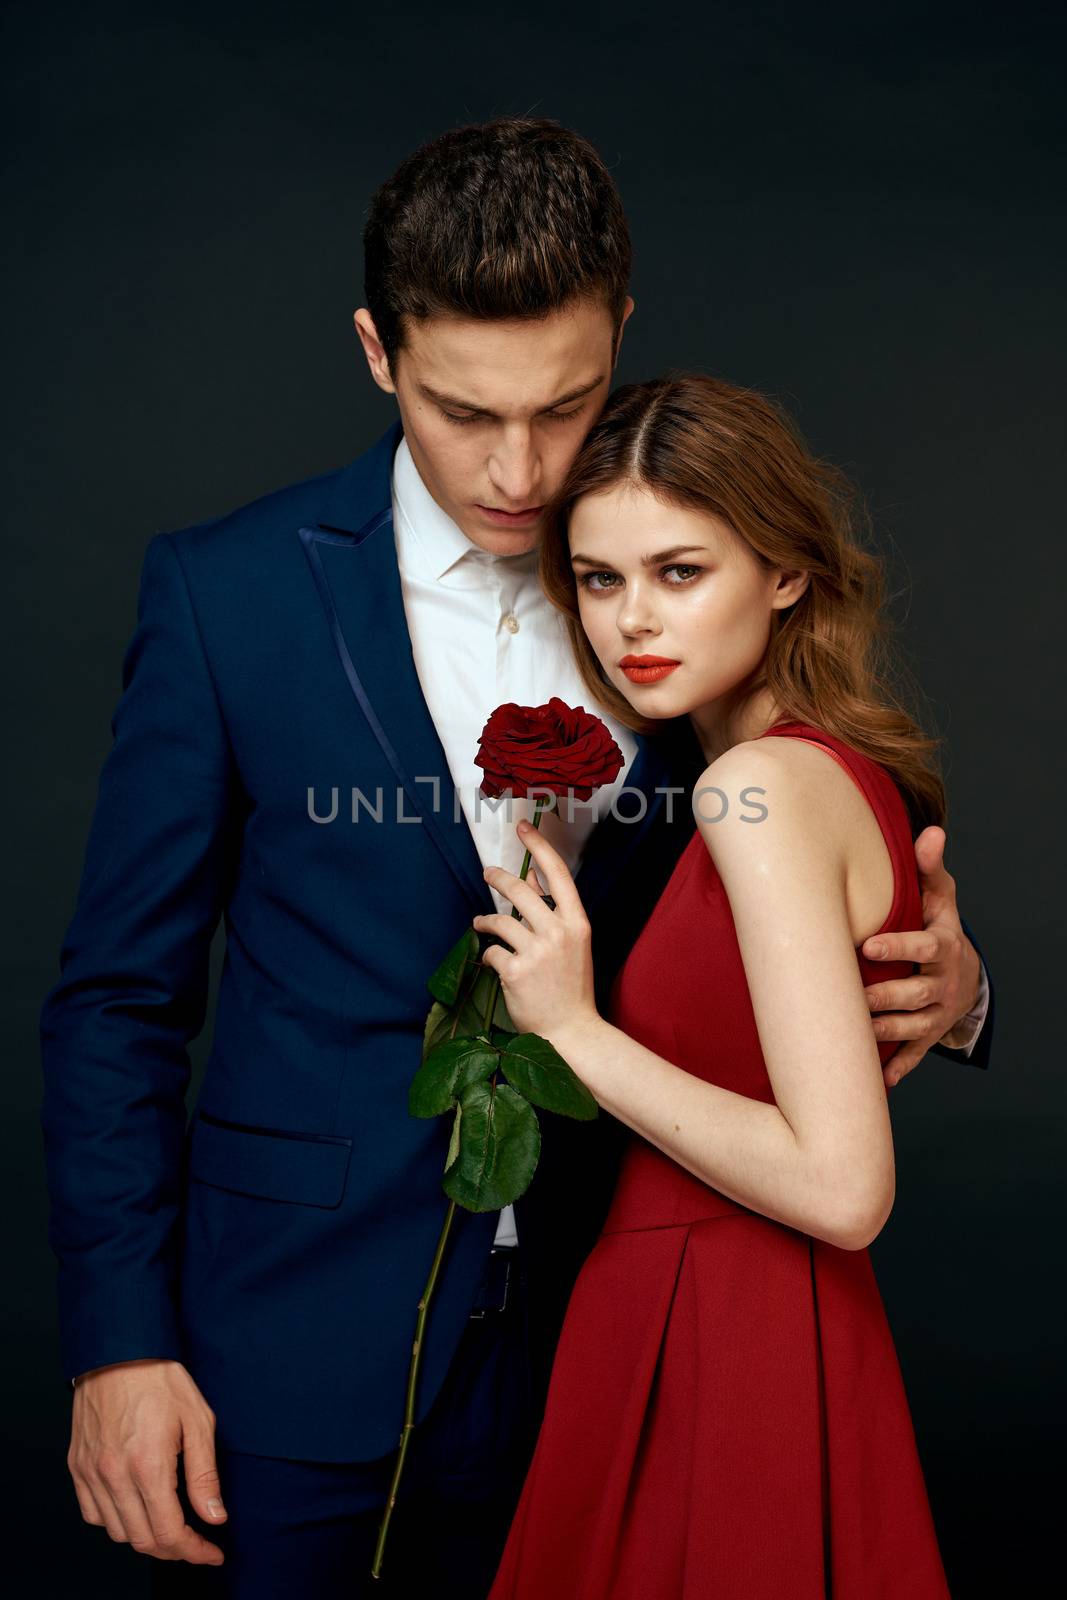 luxury couple hug romance relationship rose over dark isolated background. High quality photo